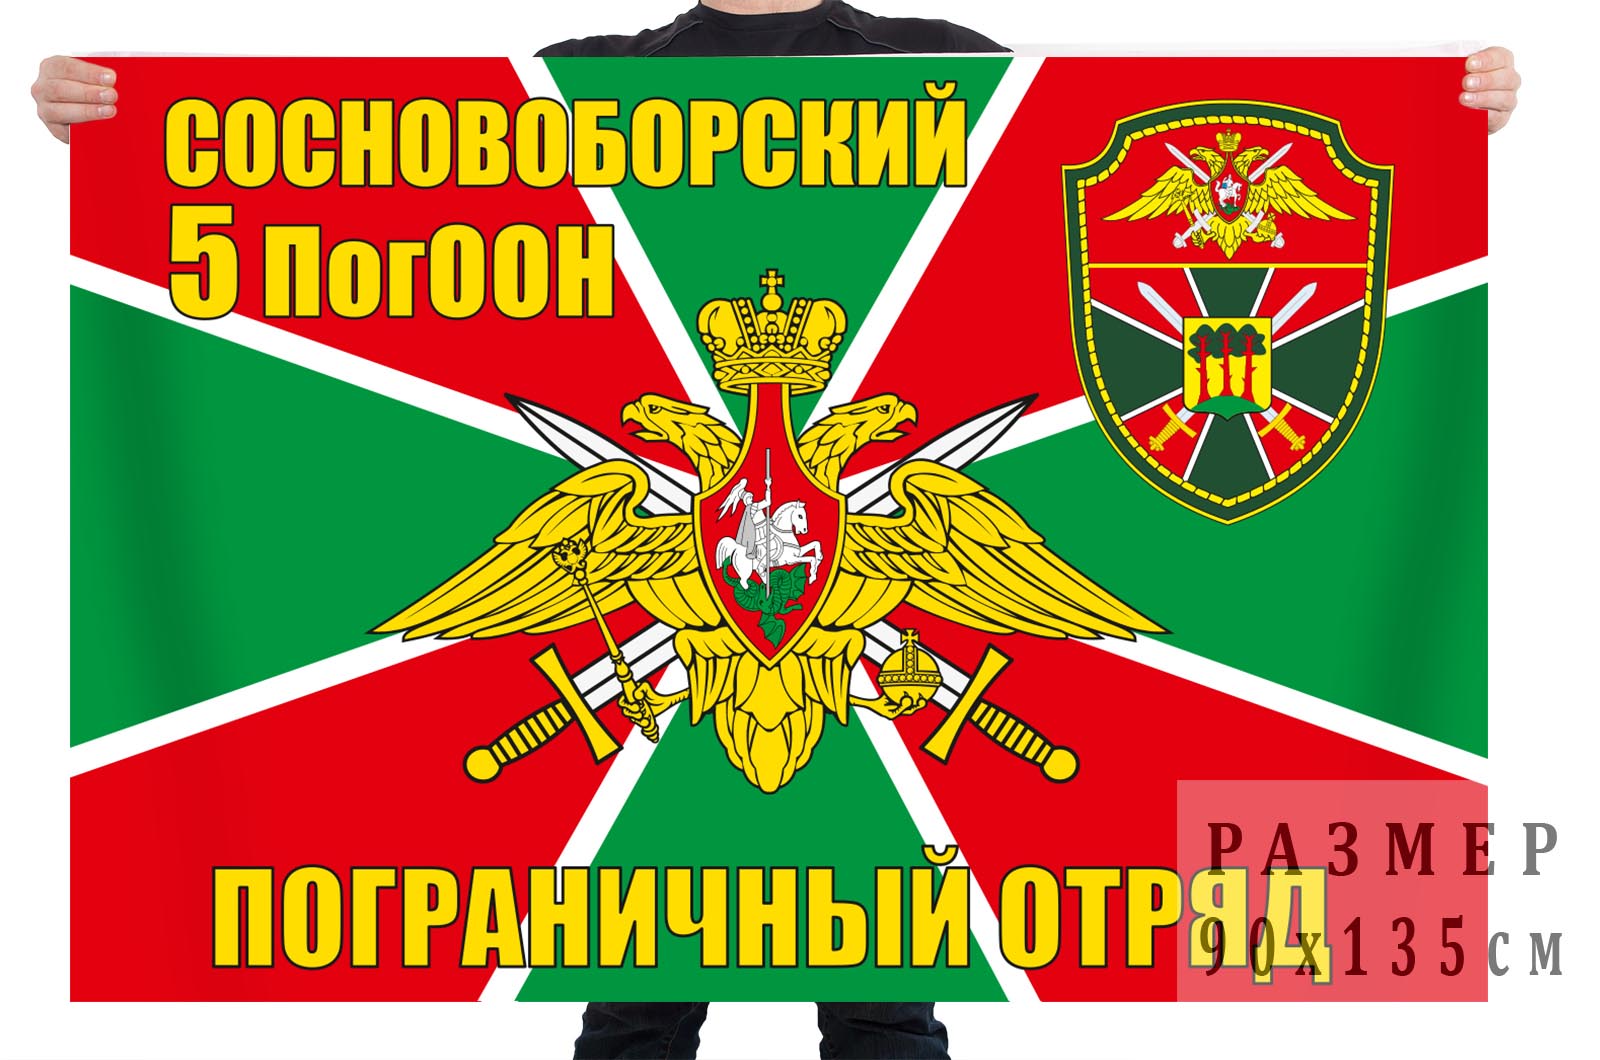 Флаг Сосновоборского 5 ПогООН